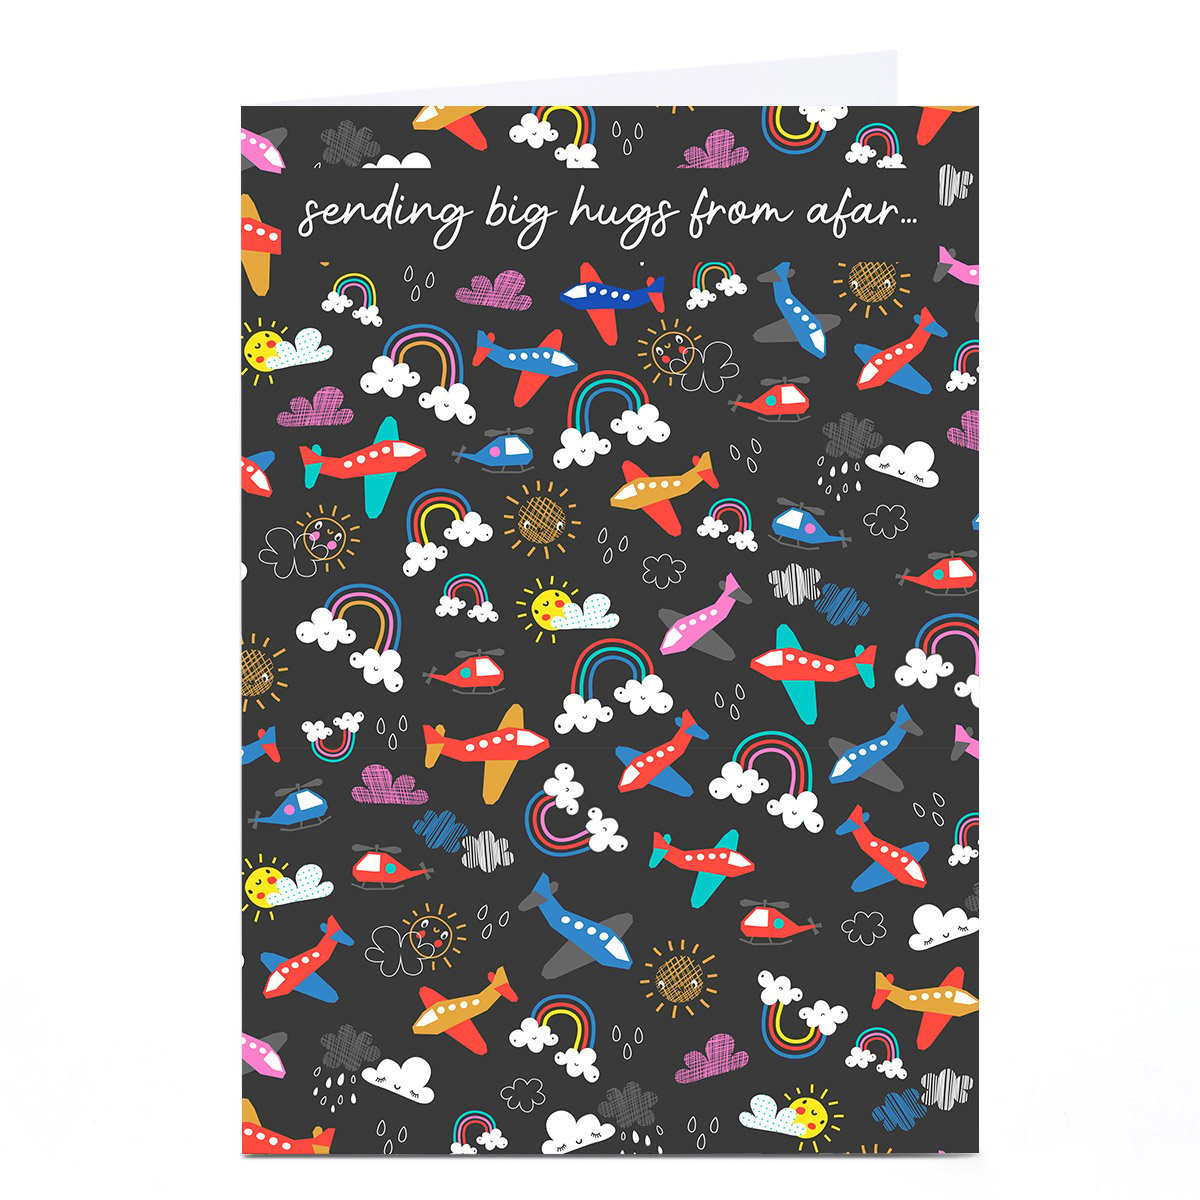 Personalised Rachel Griffin Birthday Card - Sending Big Hugs From Afar